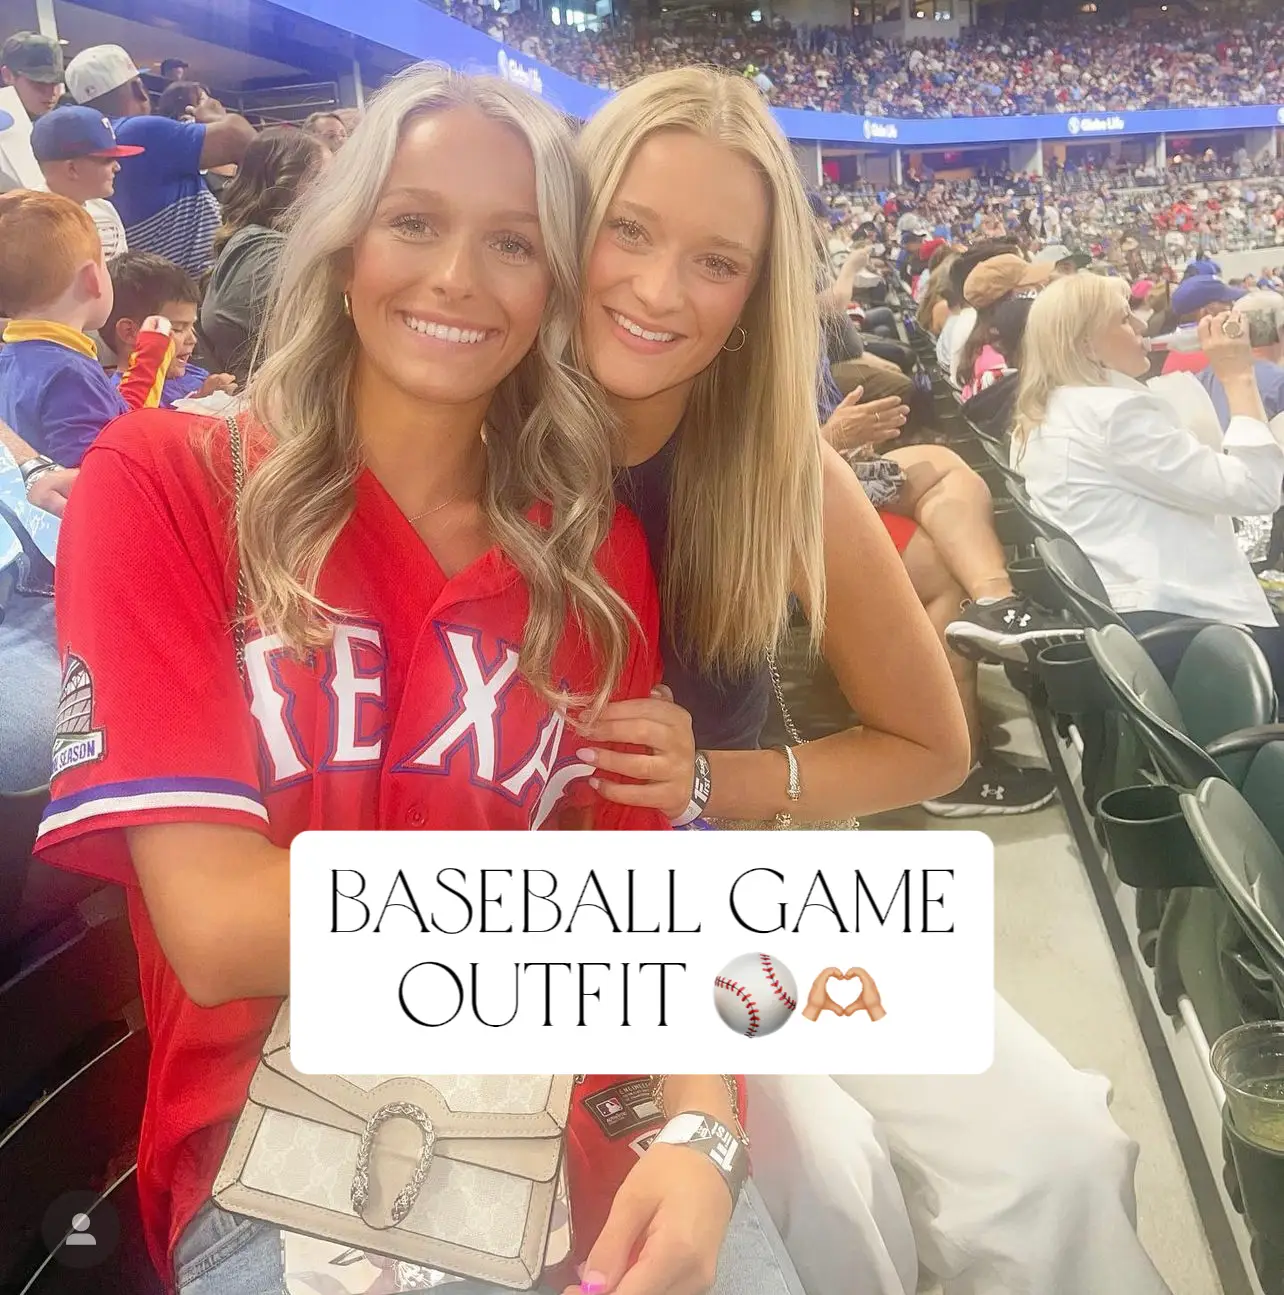 Baseball game outfit  Baseball game outfits, Gaming clothes, Ballpark  outfit